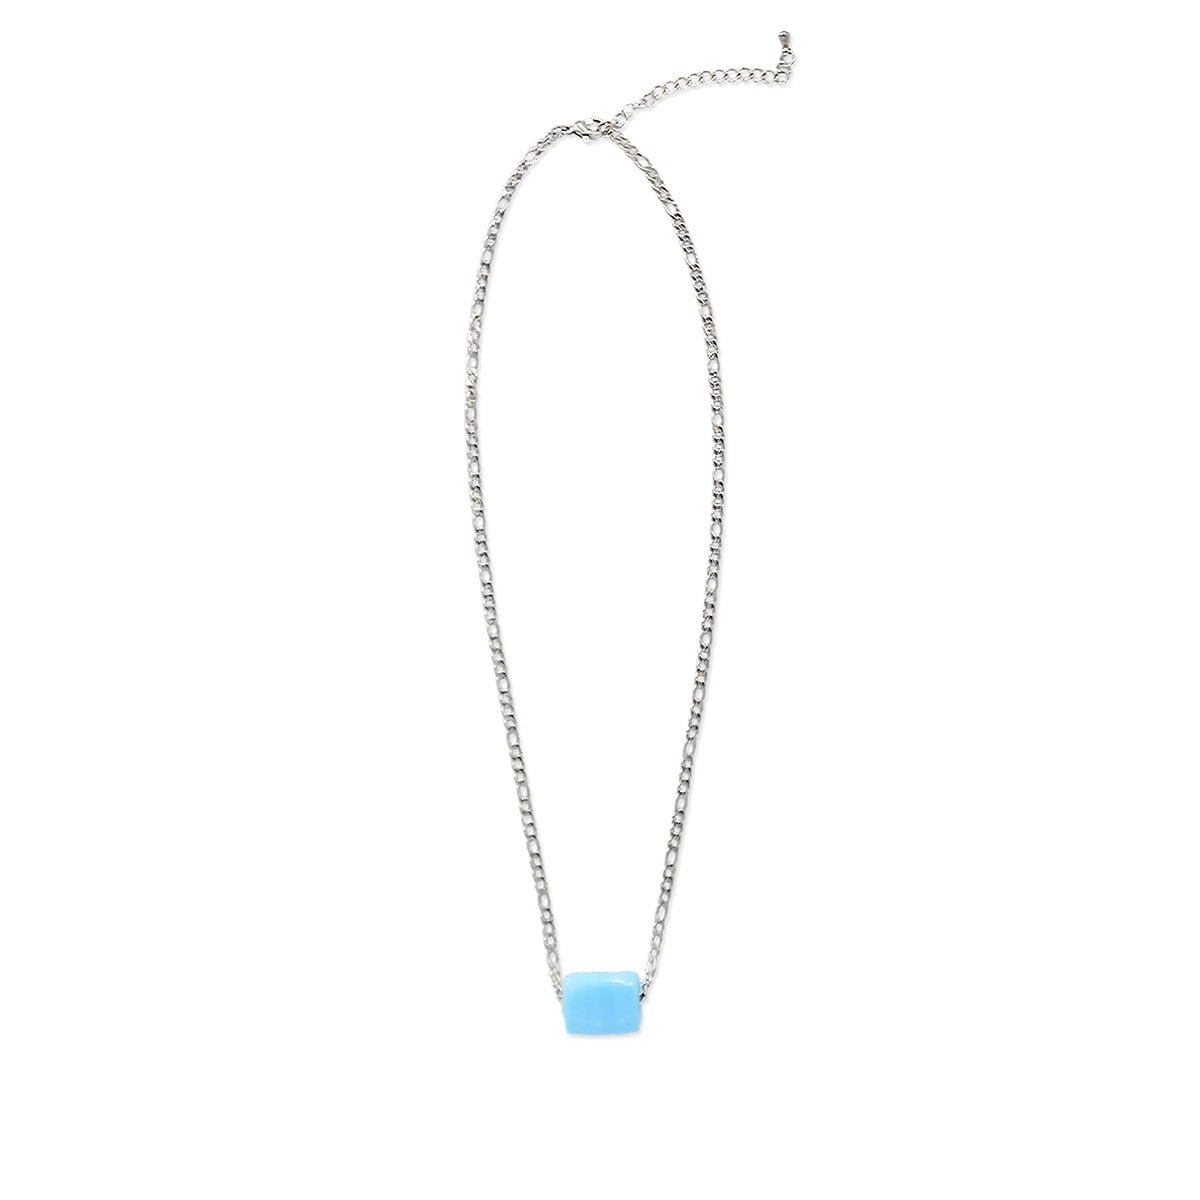 Blue bead steel necklace